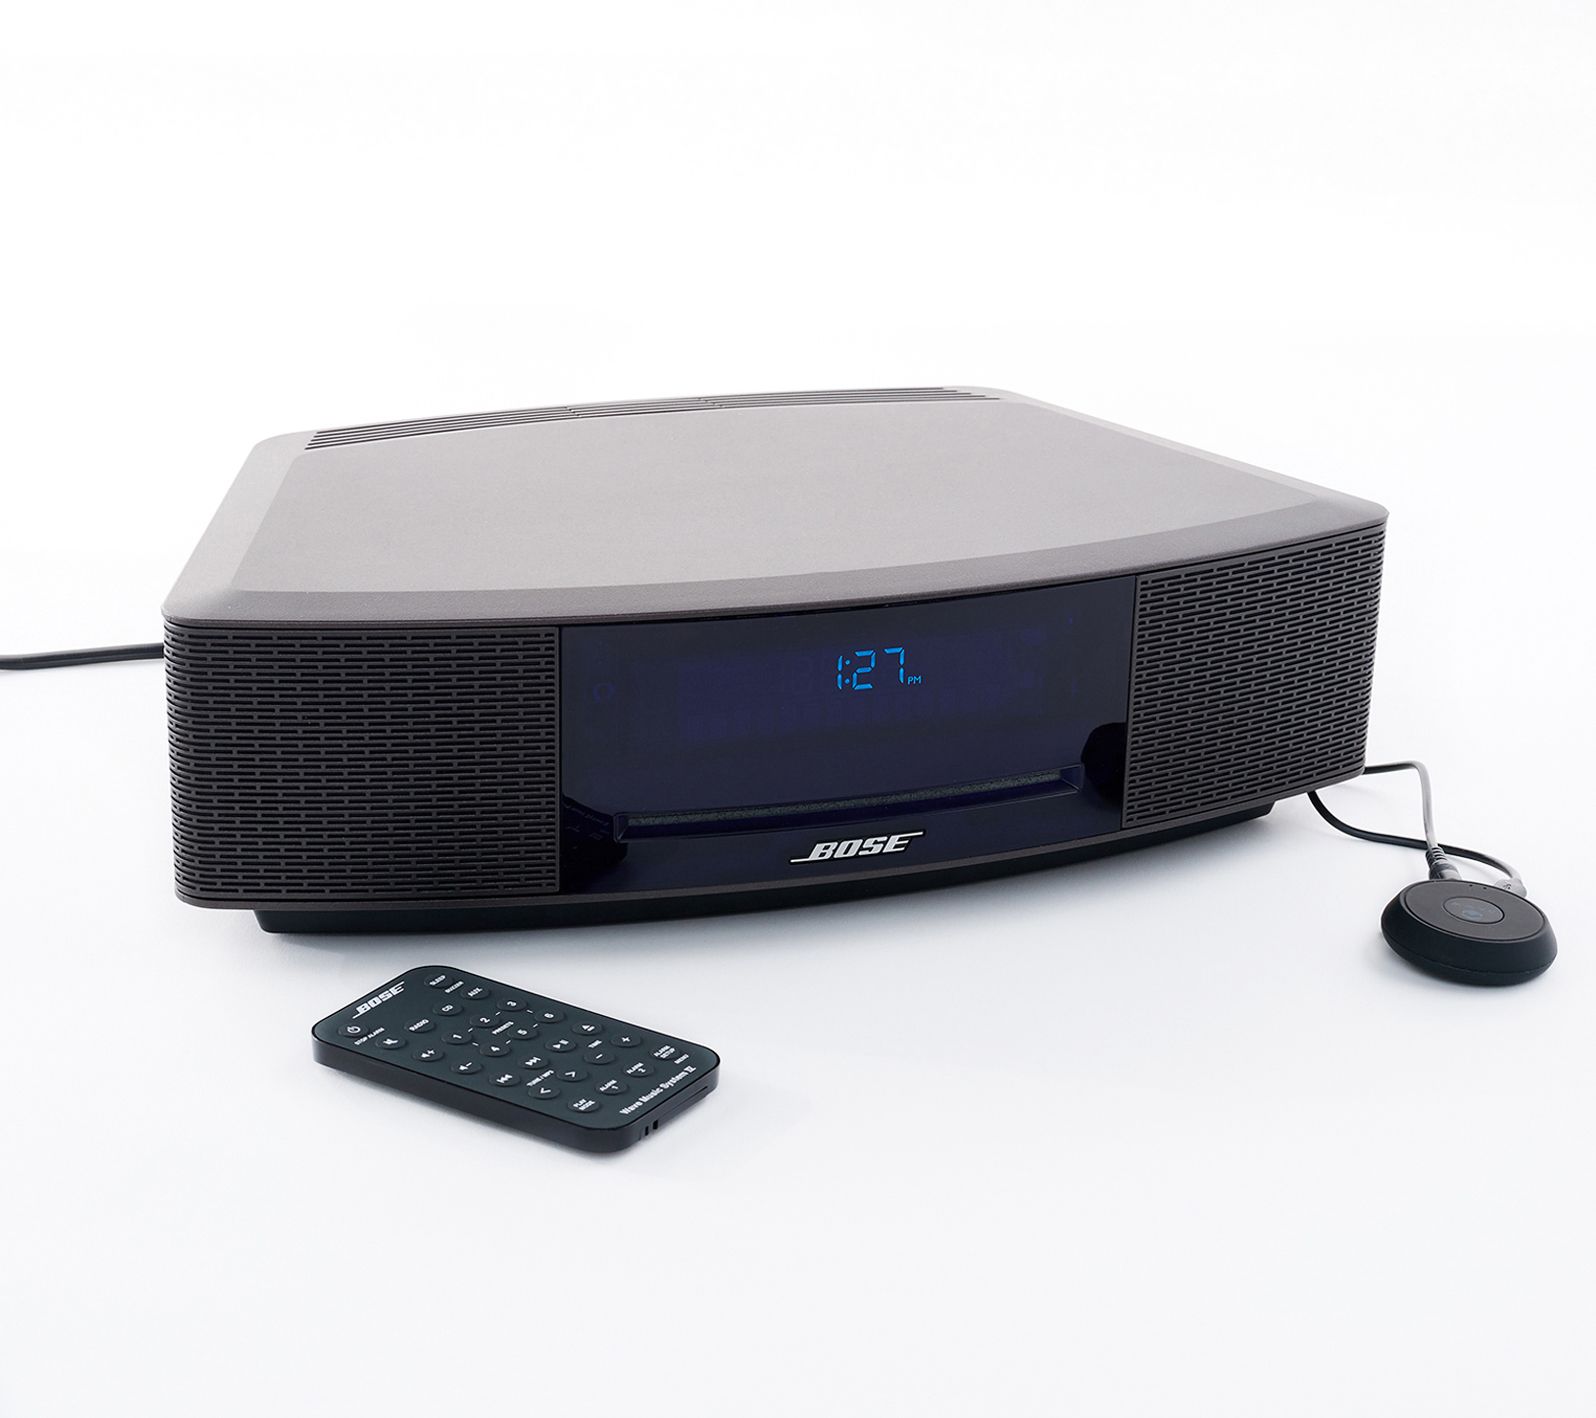 ruimte moeilijk tevreden te krijgen Oefening Bose Wave Music System IV with CD Slot and Bluetooth Receiver - QVC.com